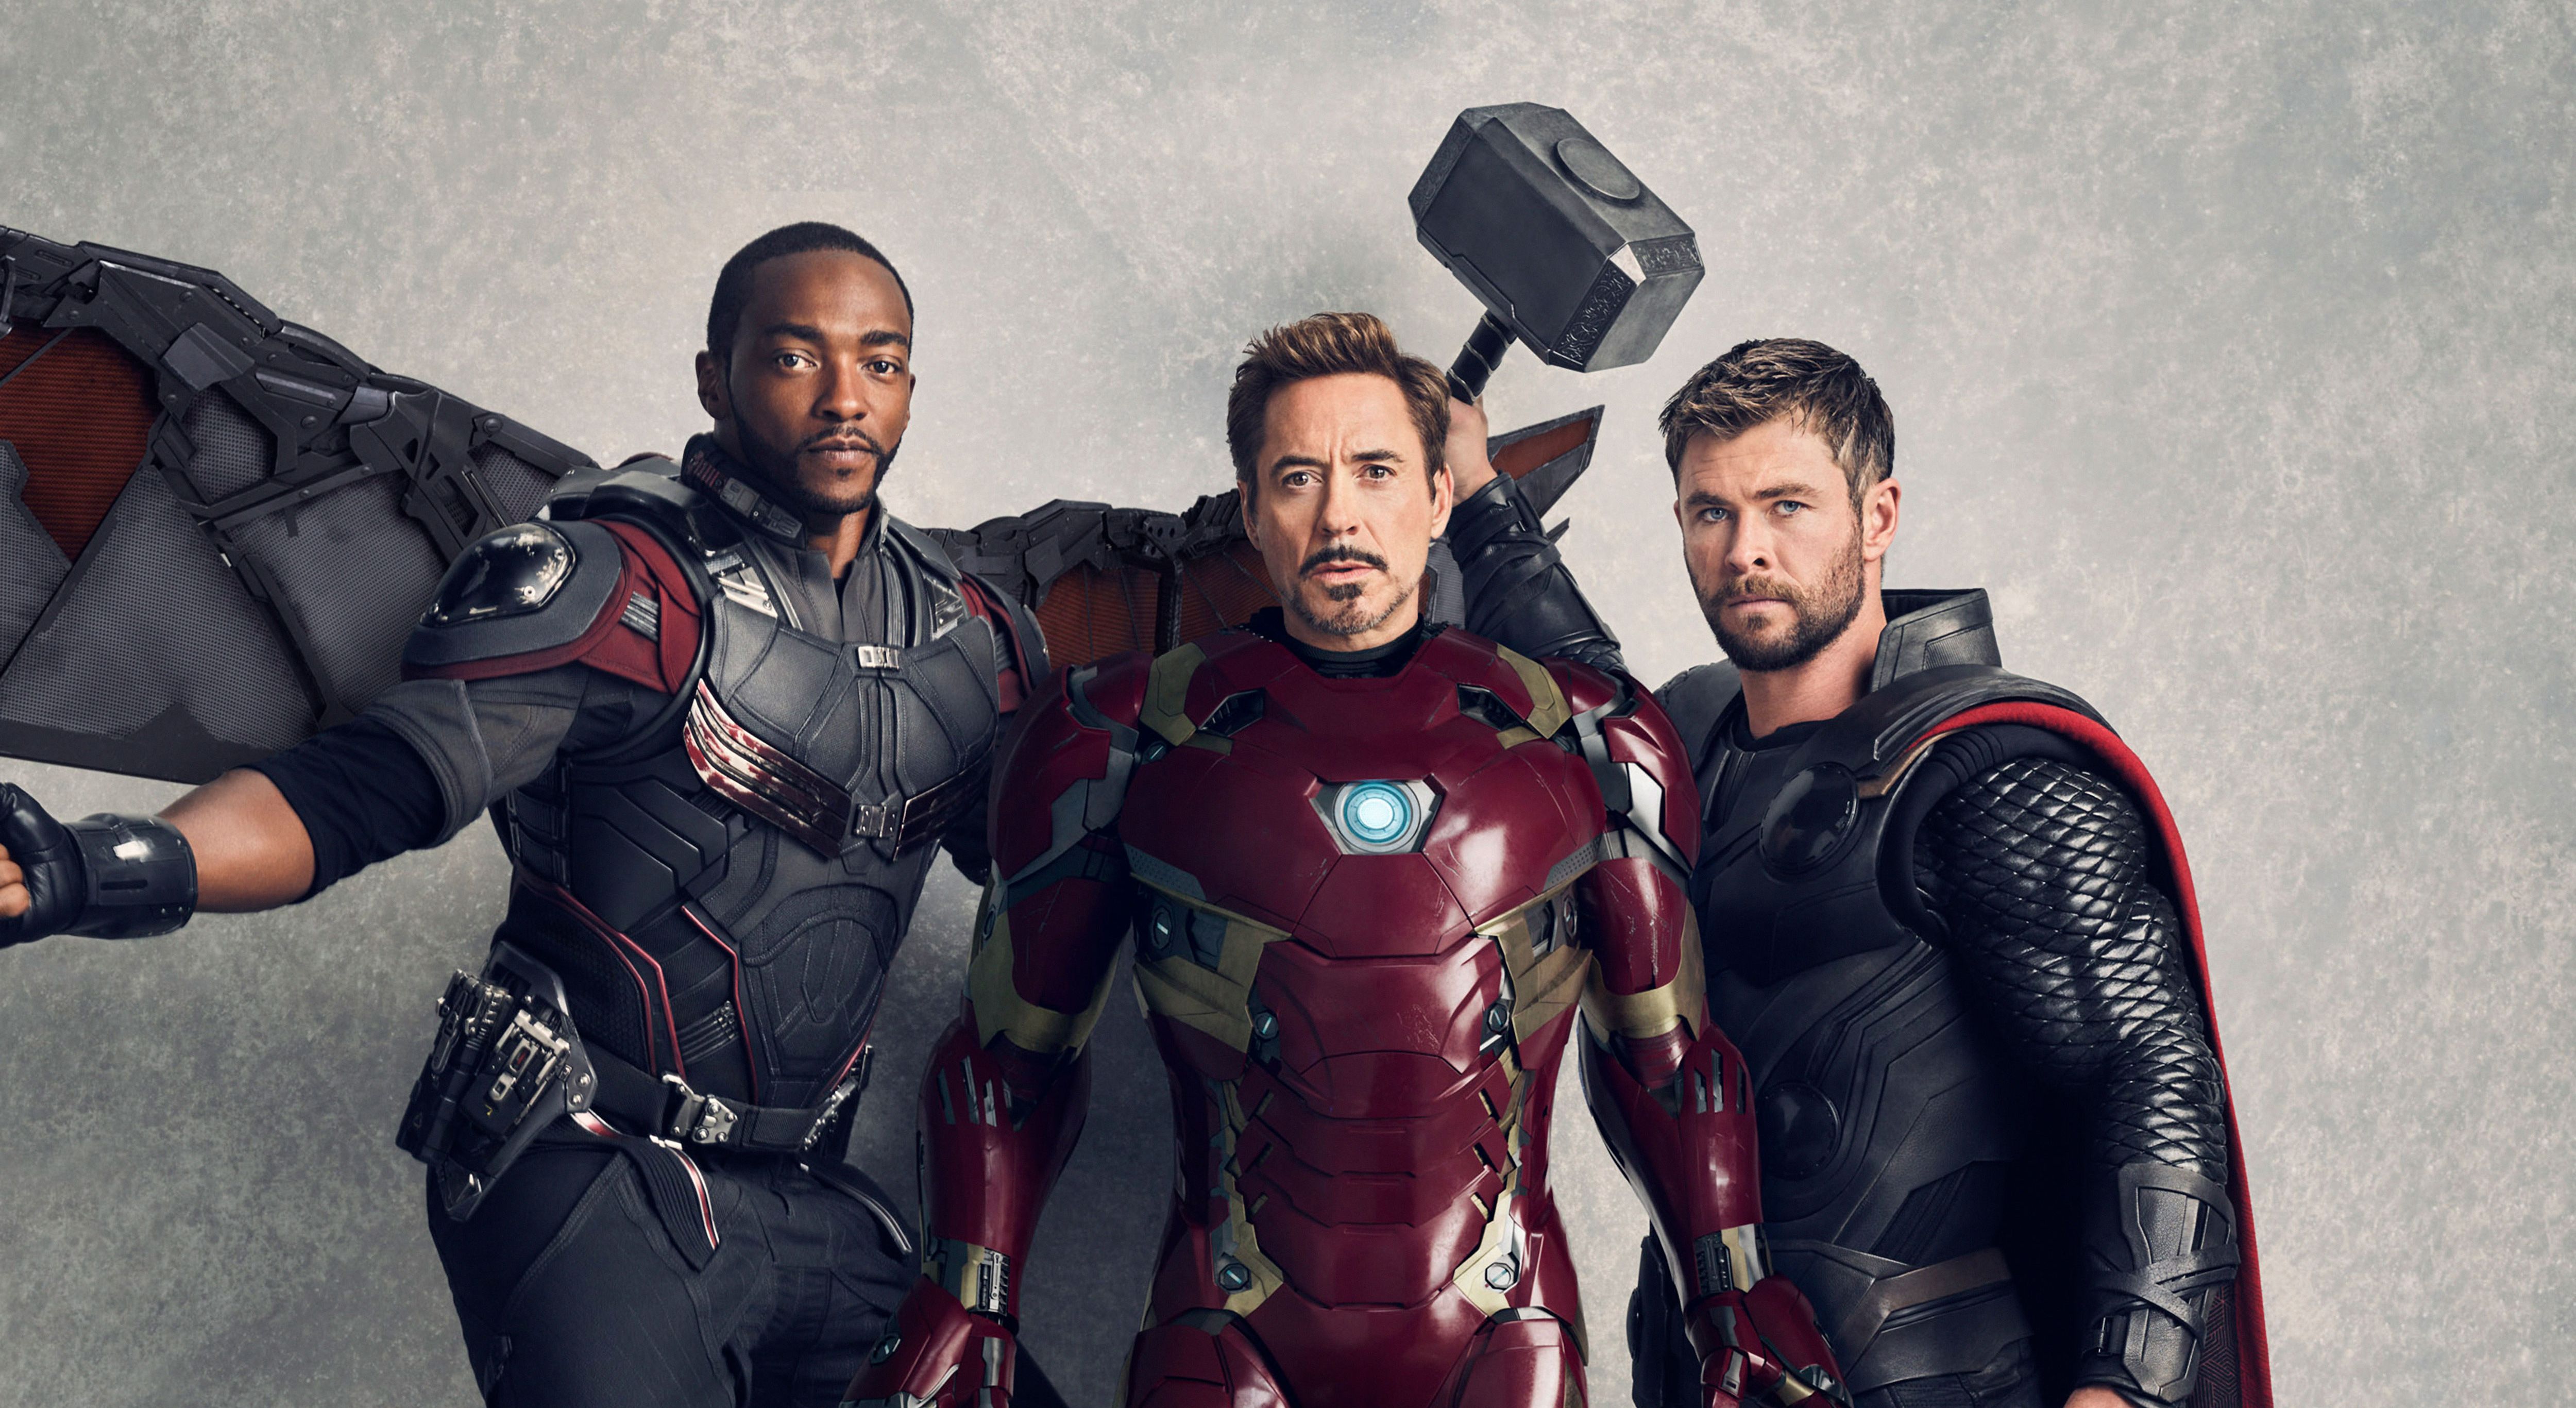 Avengers: Infinity War 4k Ultra HD Wallpaper. Background Image